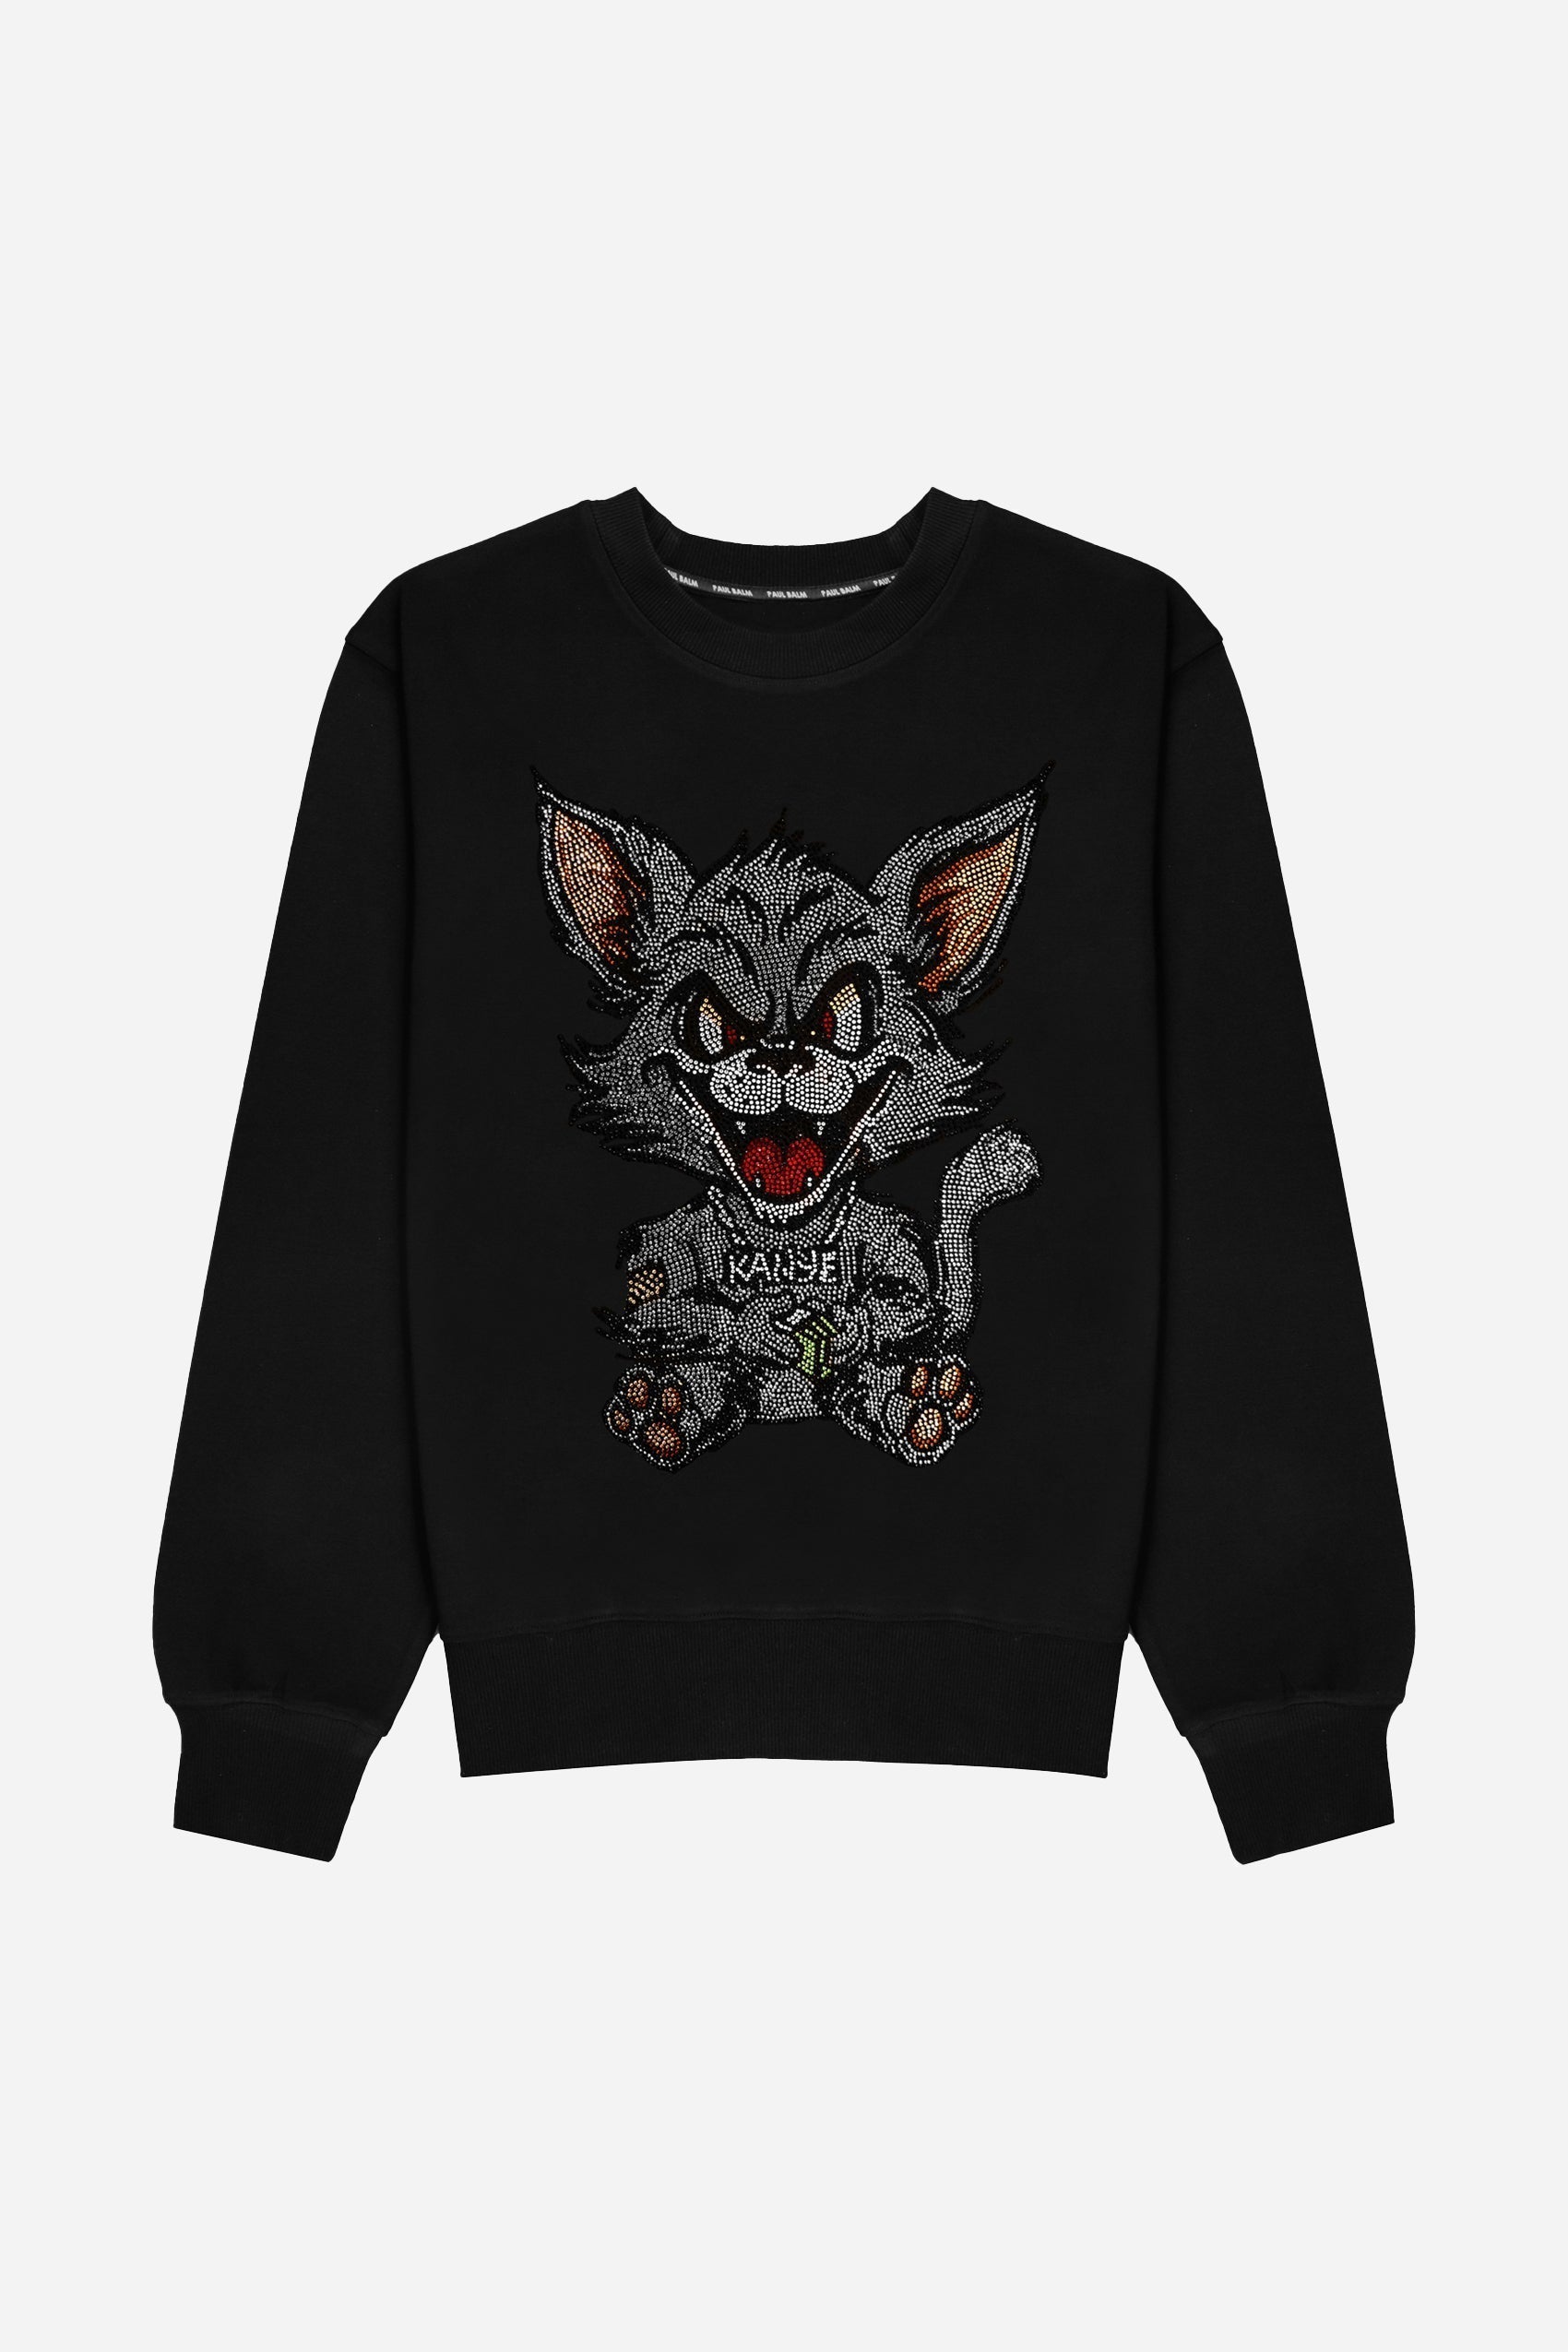 Crystal Black Kanye Sweatshirt - Limited to 300 - PAUL BALM WORLD